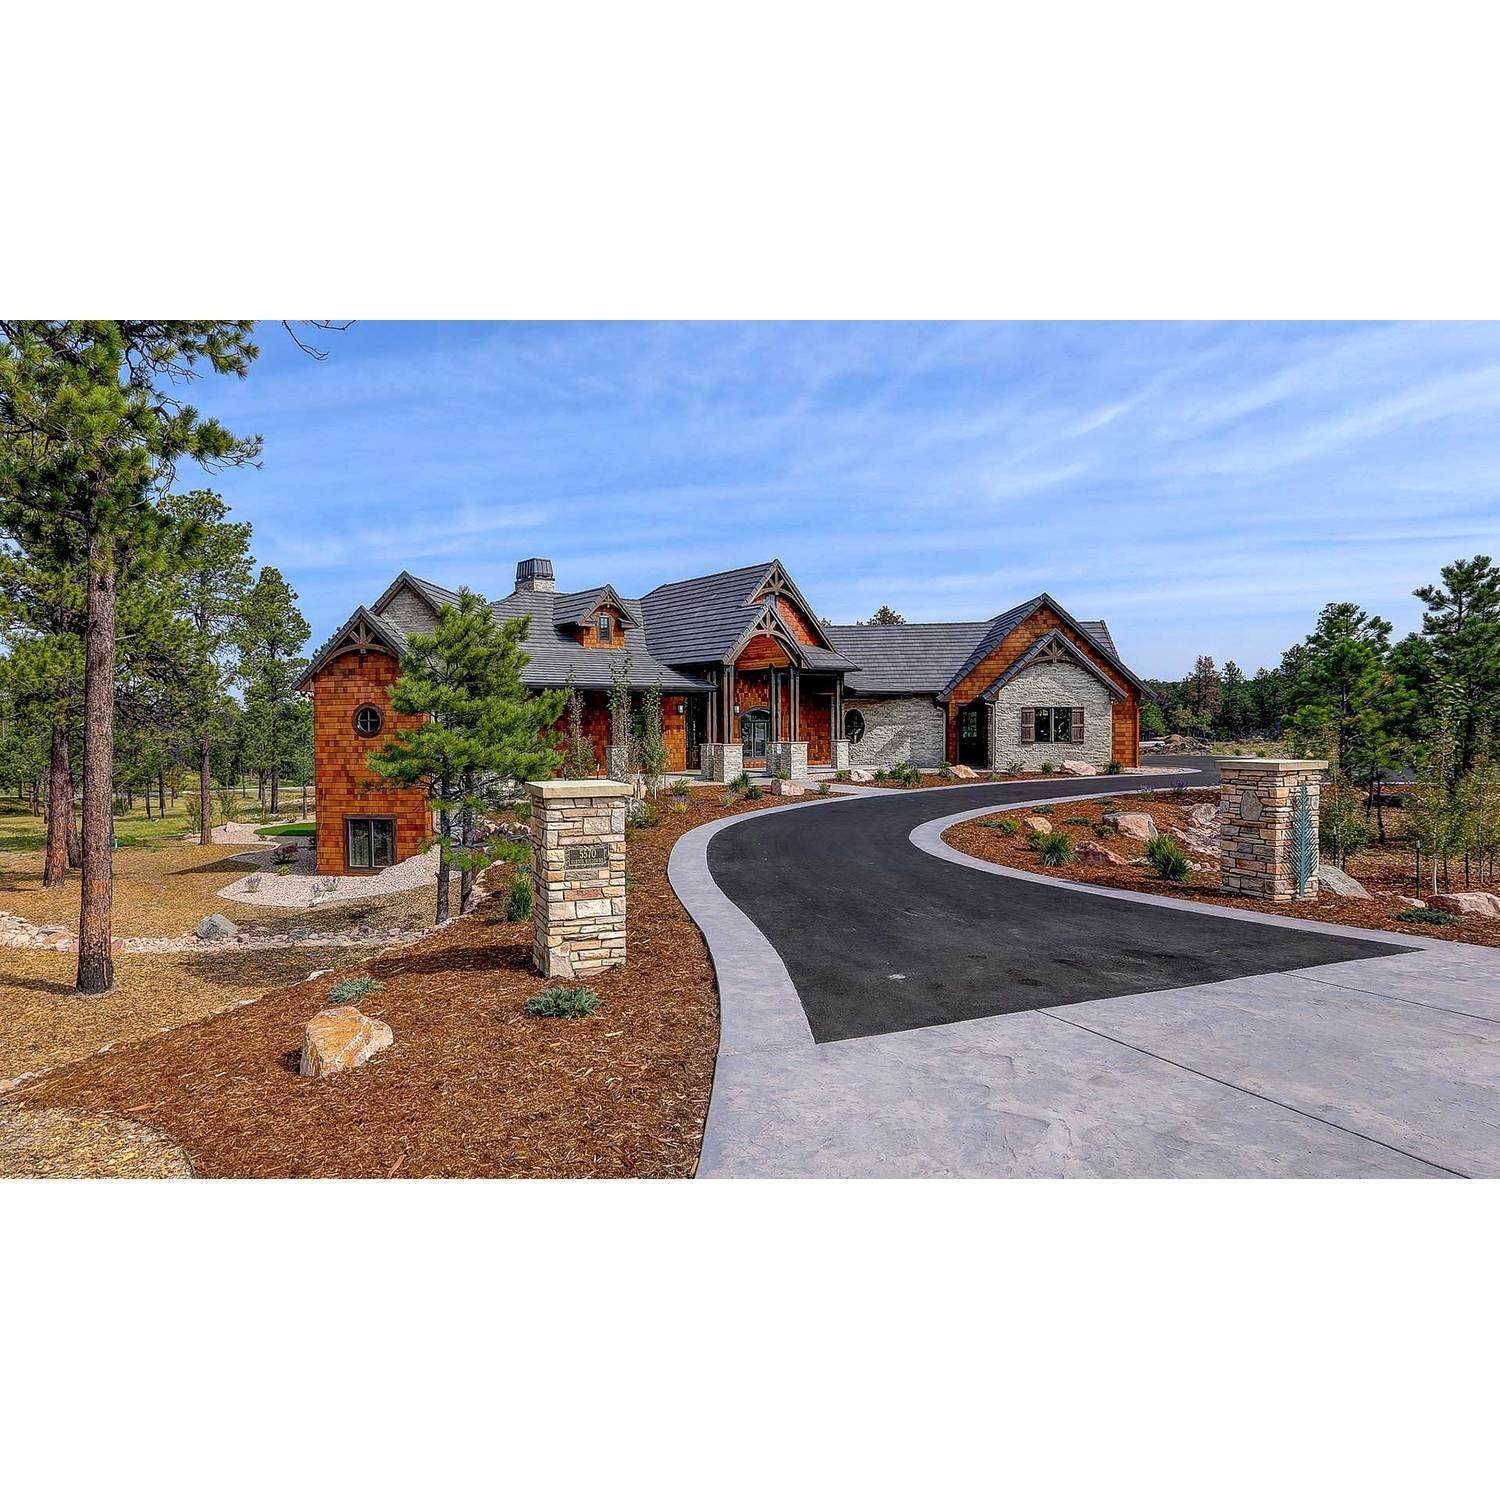 34. Galiant Homes xây dựng tại 4783 Farmingdale Dr, Colorado Springs, CO 80918